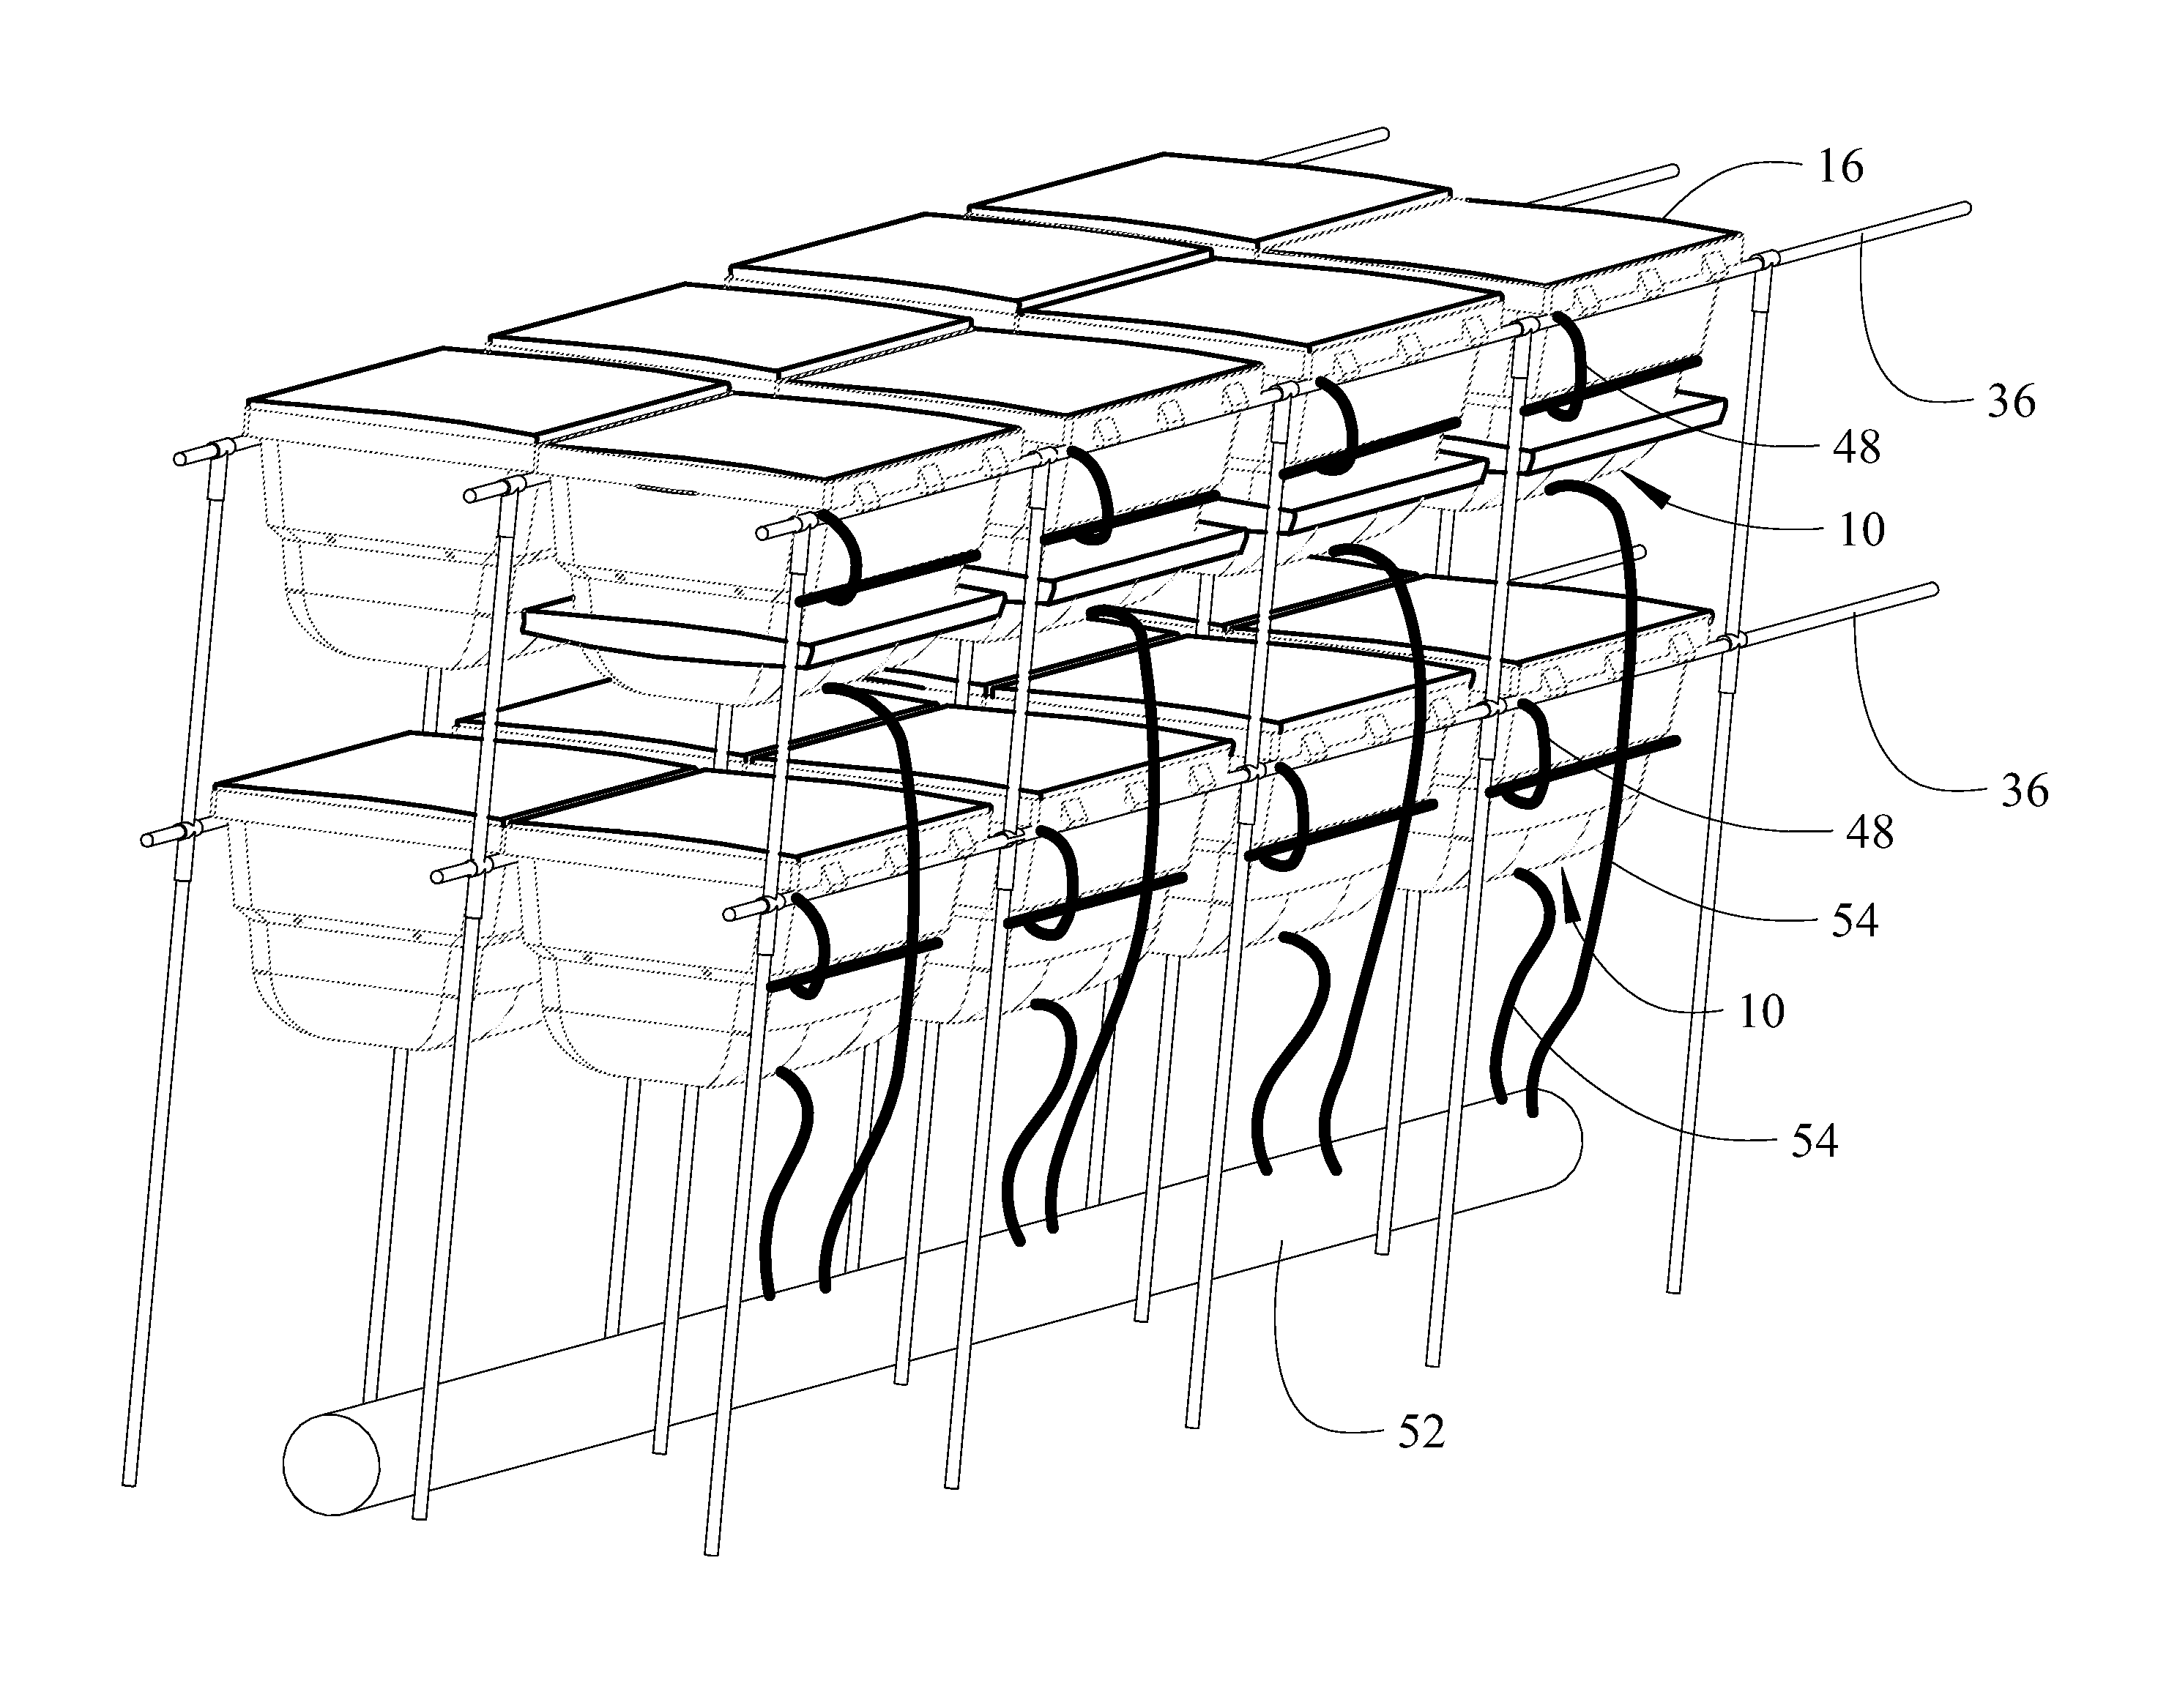 Commercial aeroponics system